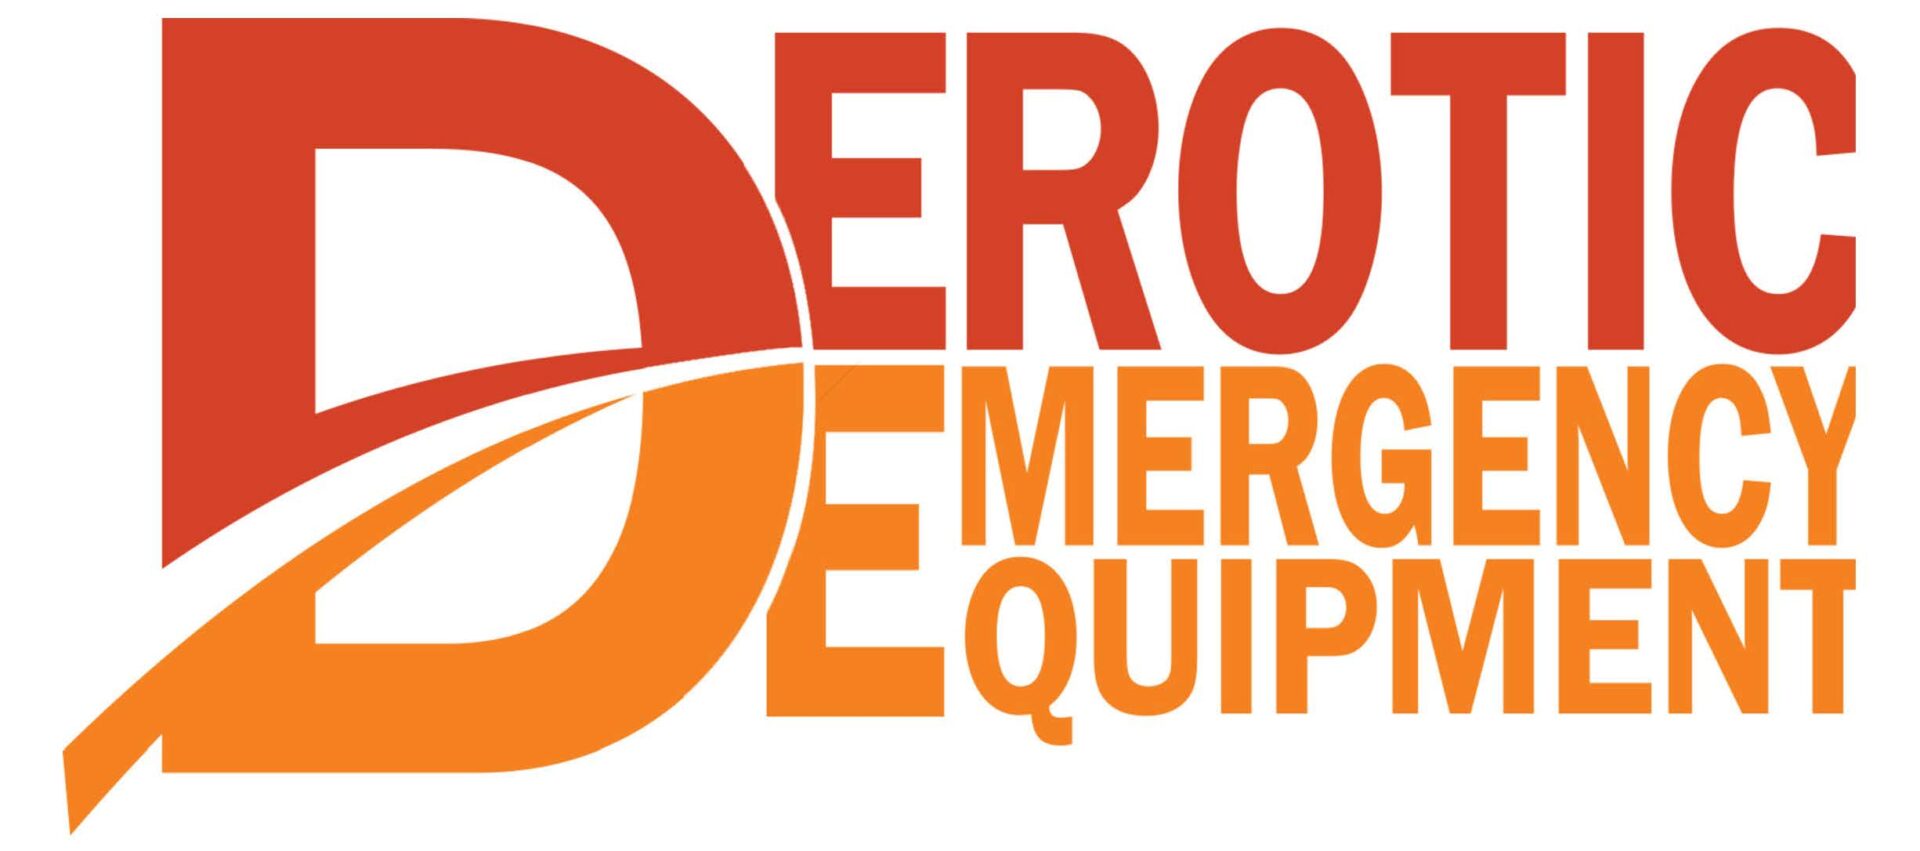 Supporting Vendor: Derotic Emergency Equipment